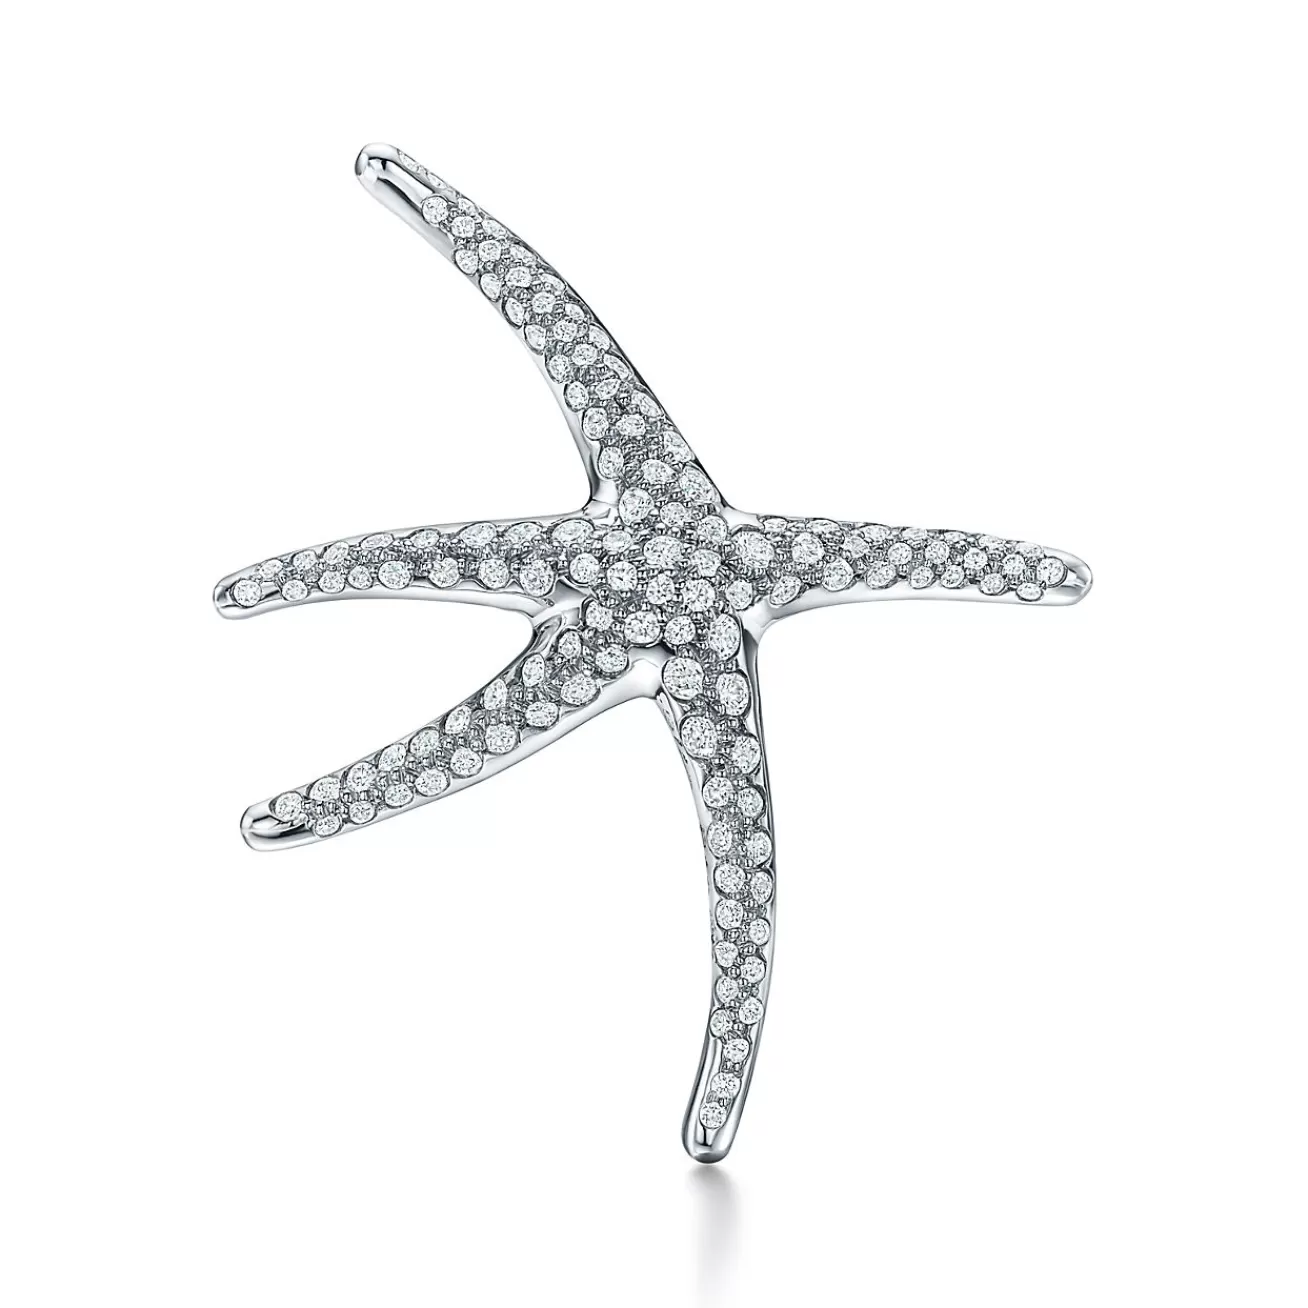 Tiffany & Co. Elsa Peretti® Starfish brooch in platinum with pavé diamonds. | ^ Brooches | Platinum Jewelry